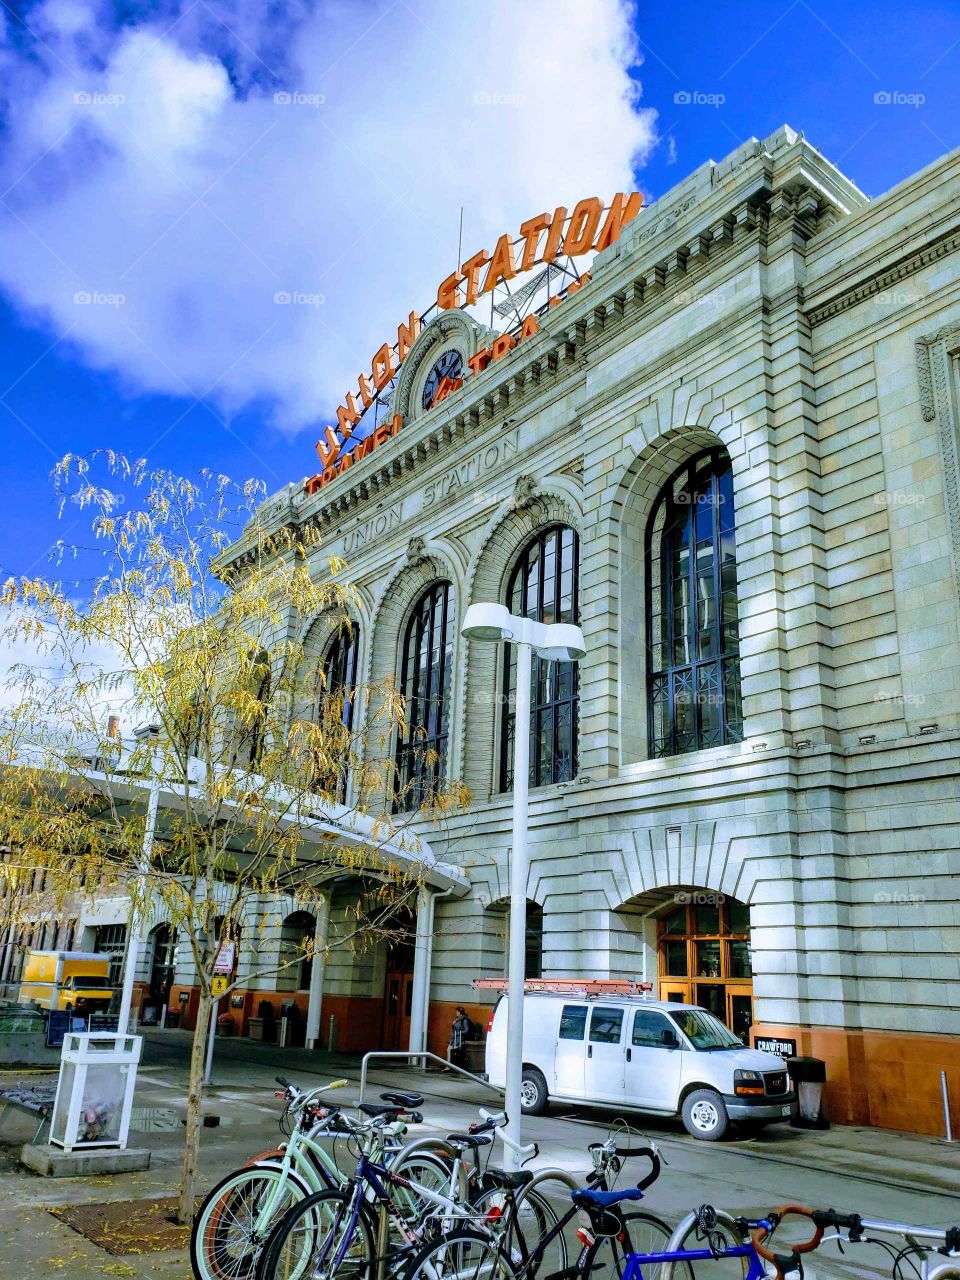 Union station downtown Denver, Colorado  Train station